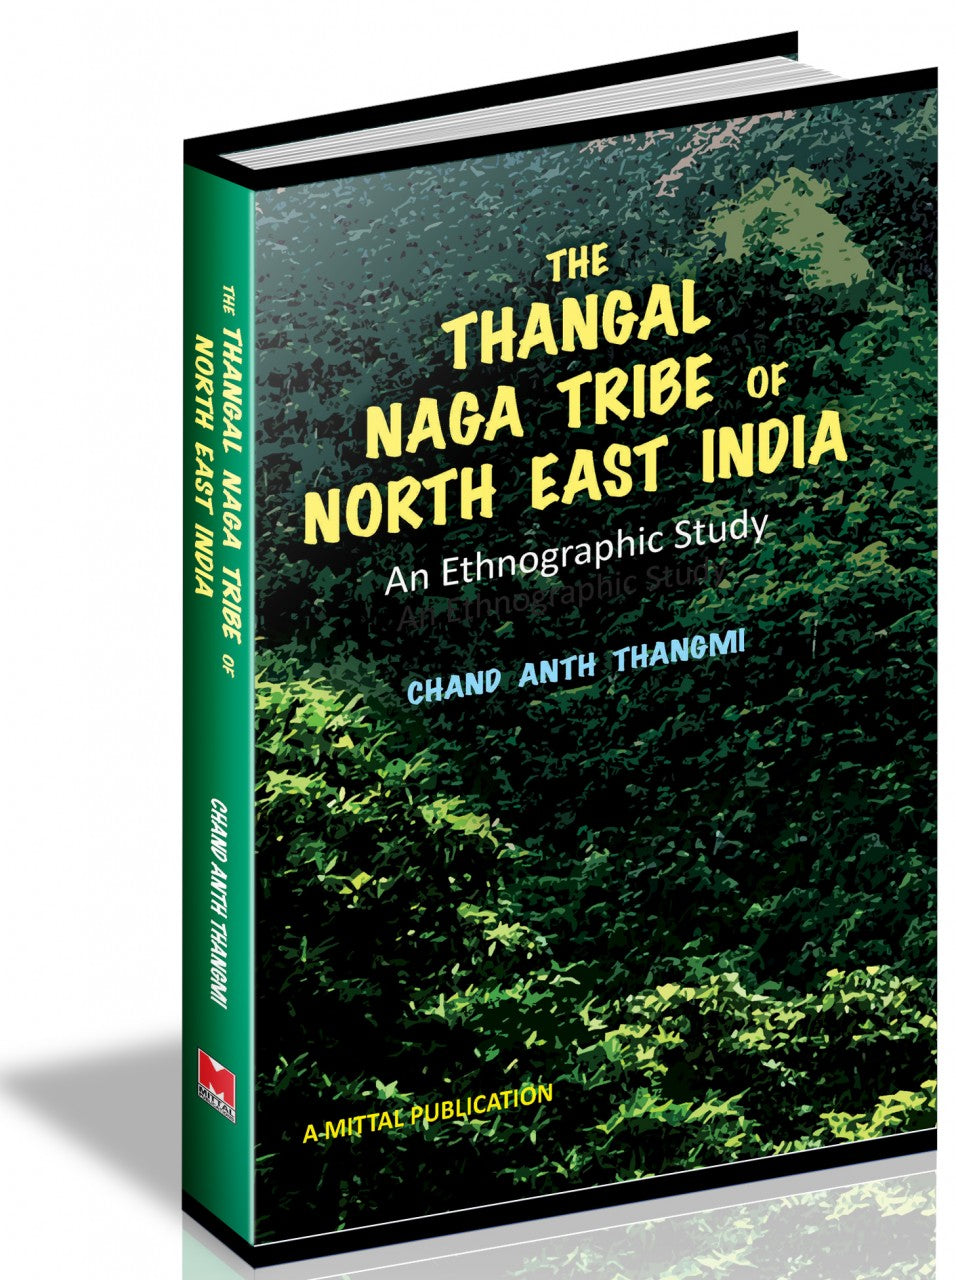 The Thangal Naga Tribe of North East India